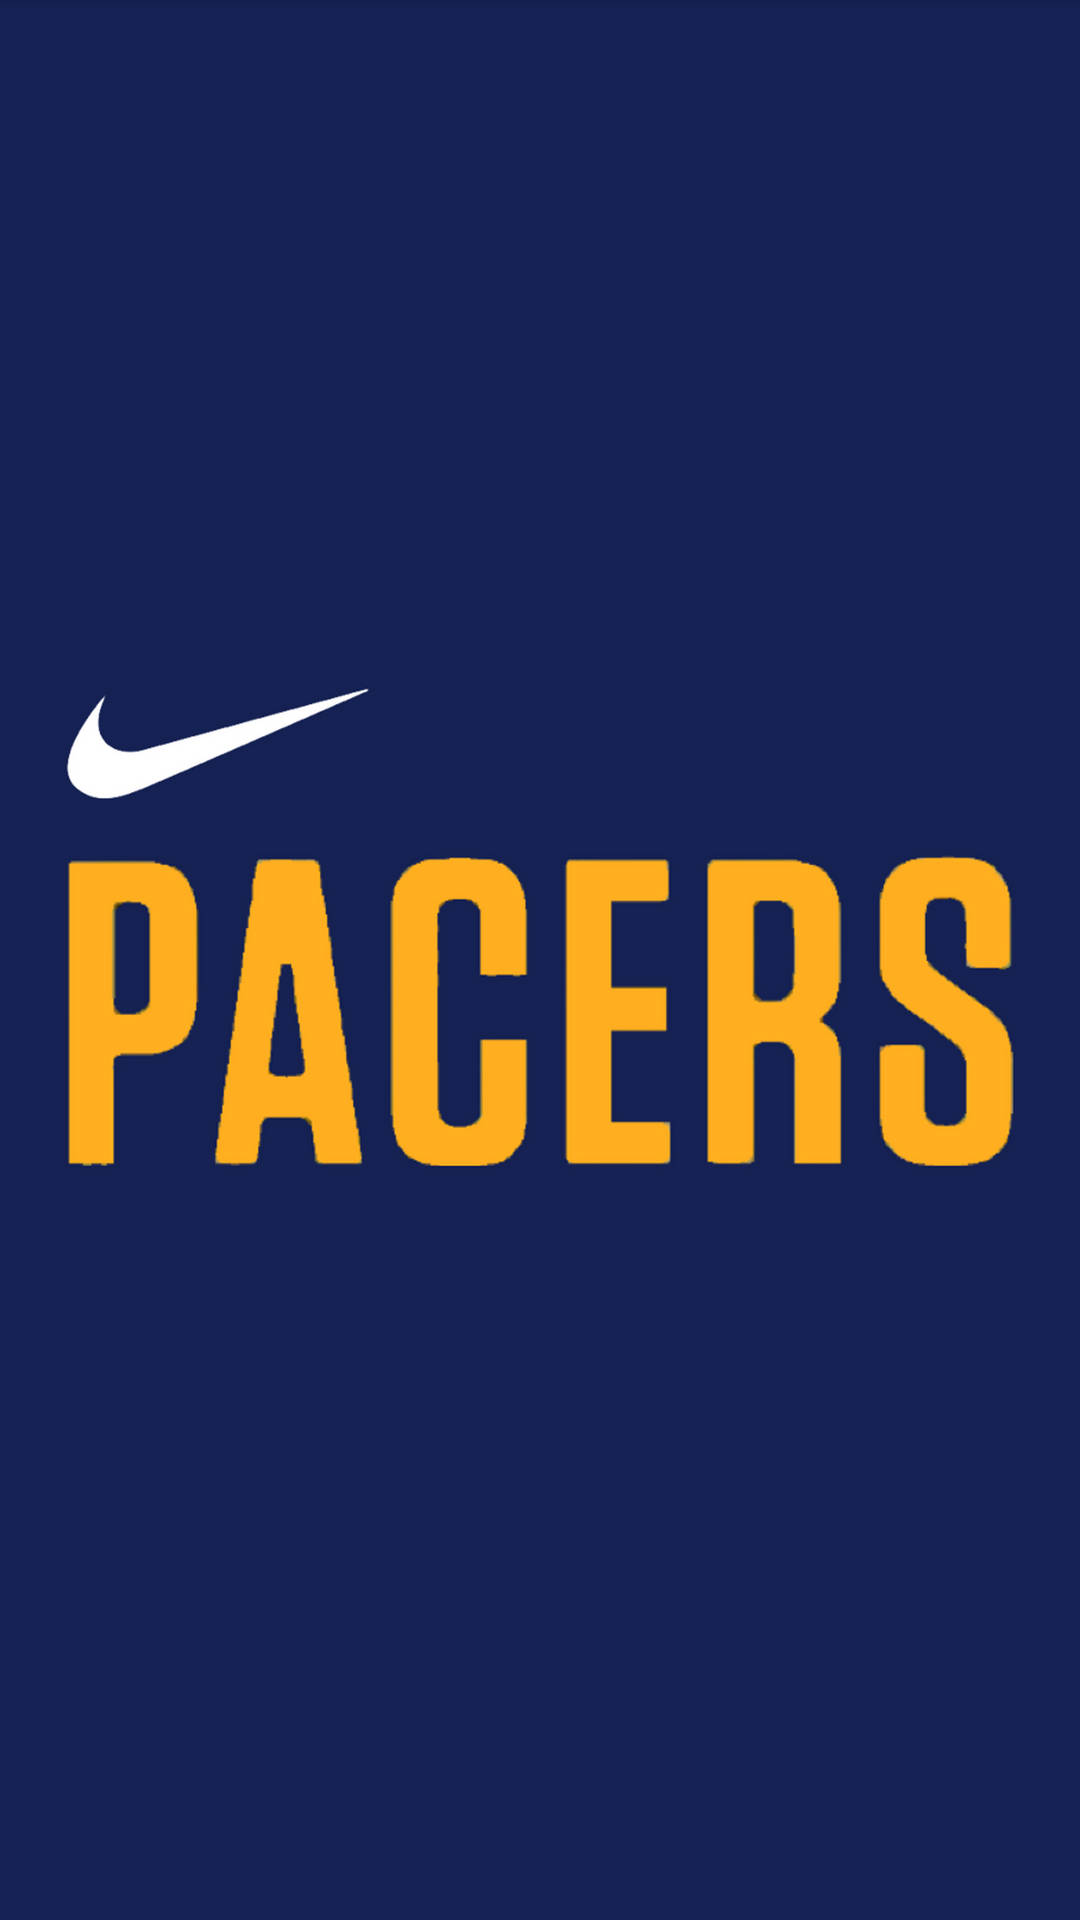 Indiana Pacers Nike swoosh logo wallpaper